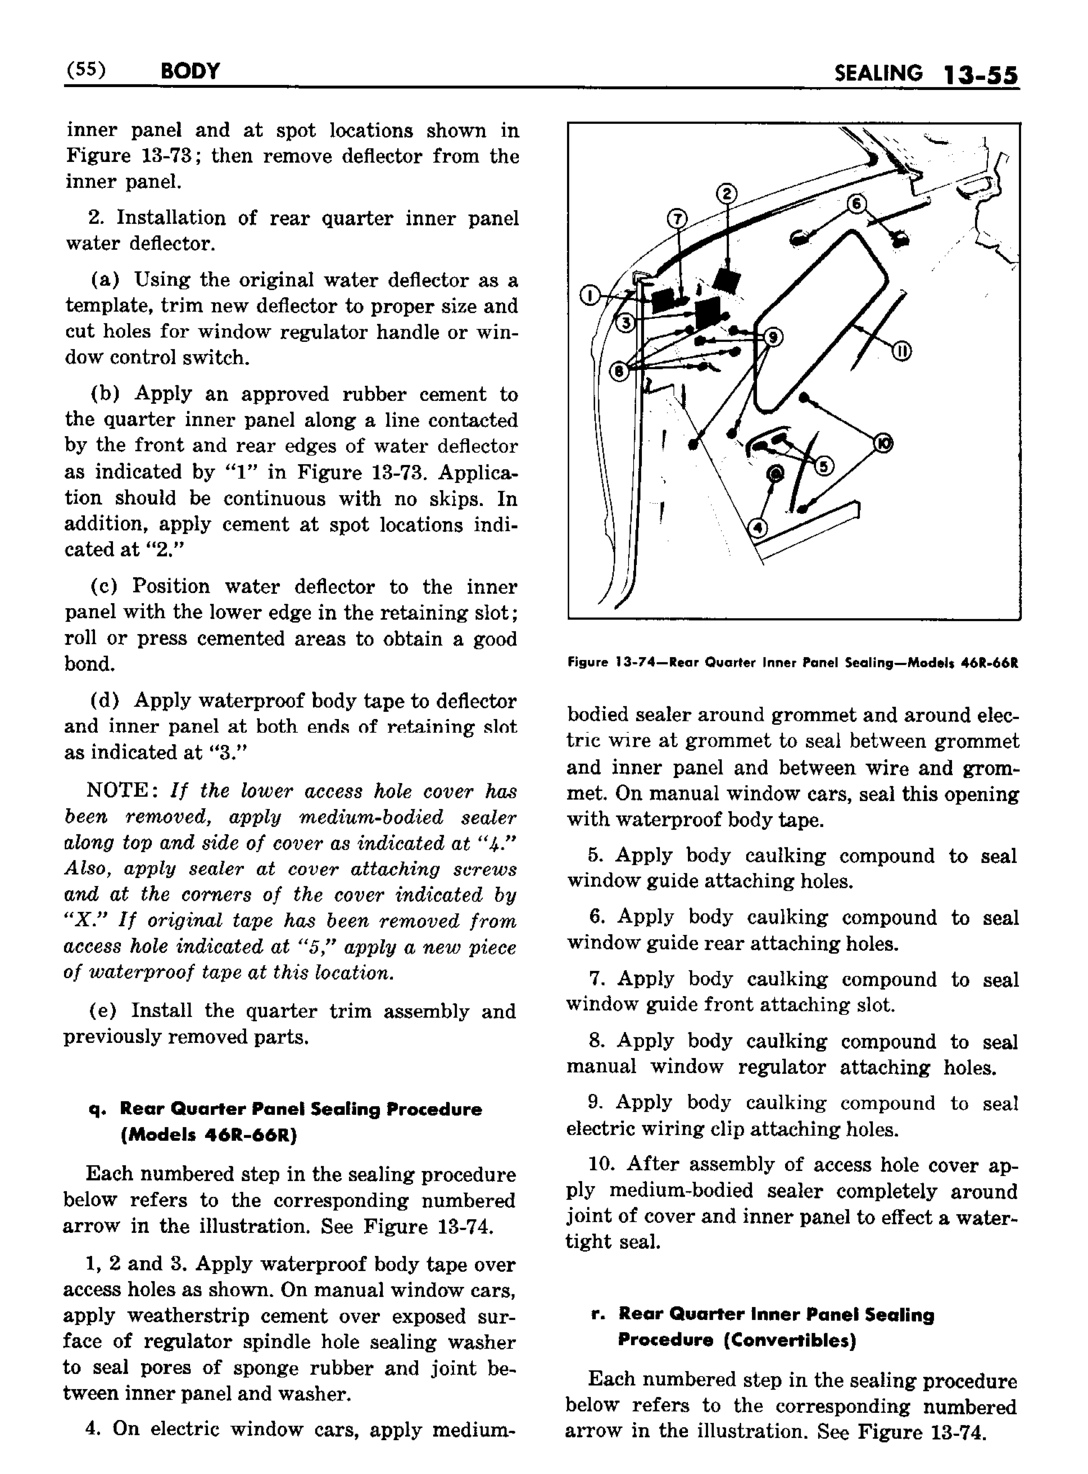 n_1958 Buick Body Service Manual-056-056.jpg